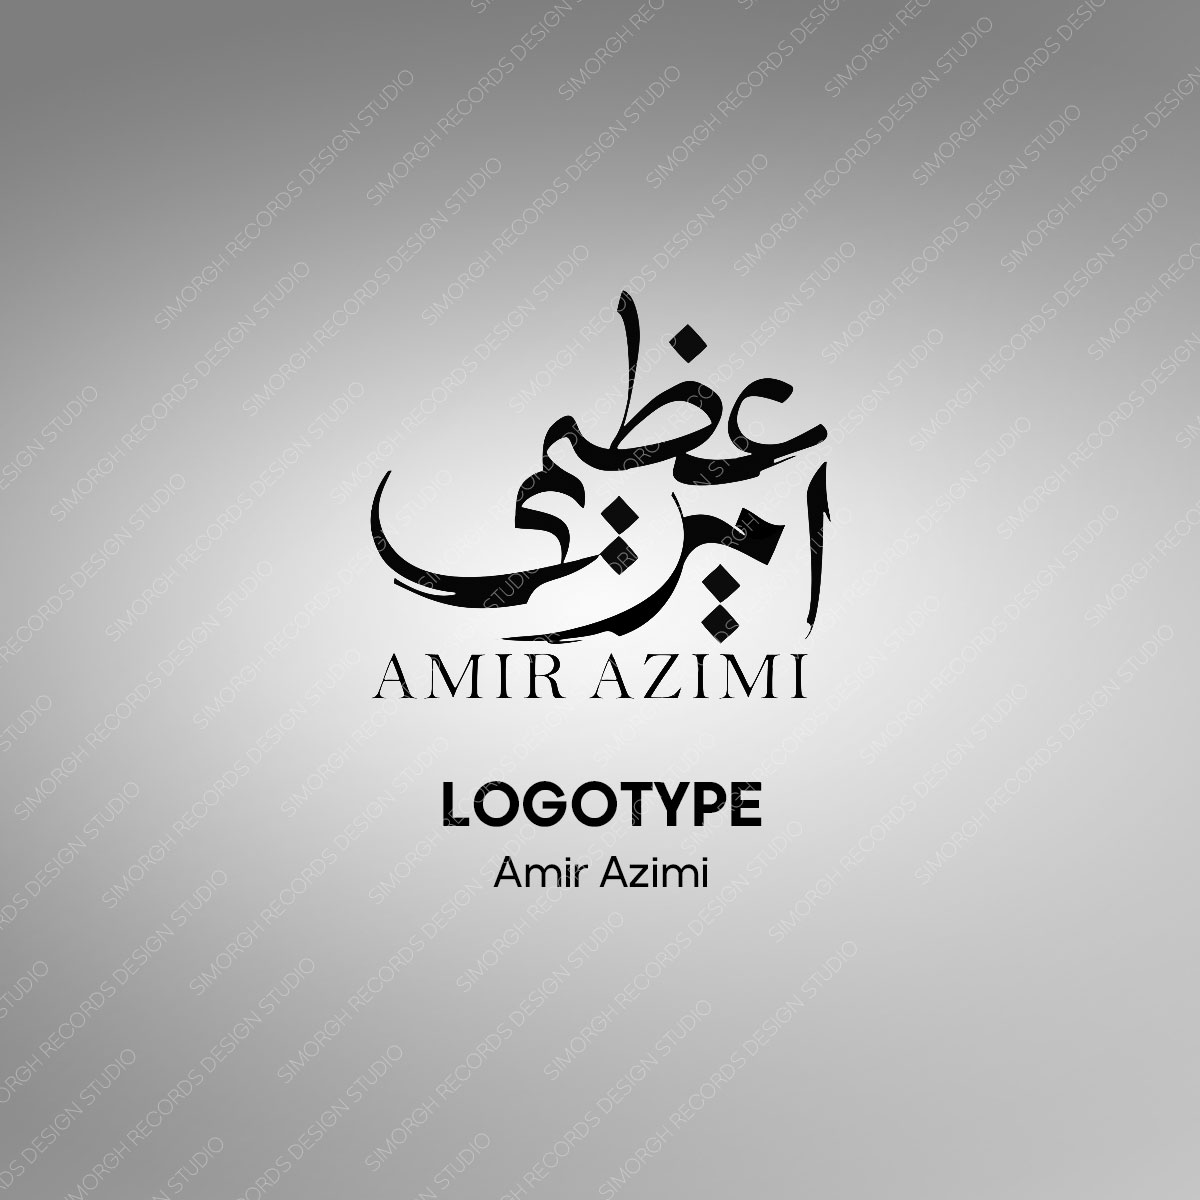 AmirAzimi-Logotype